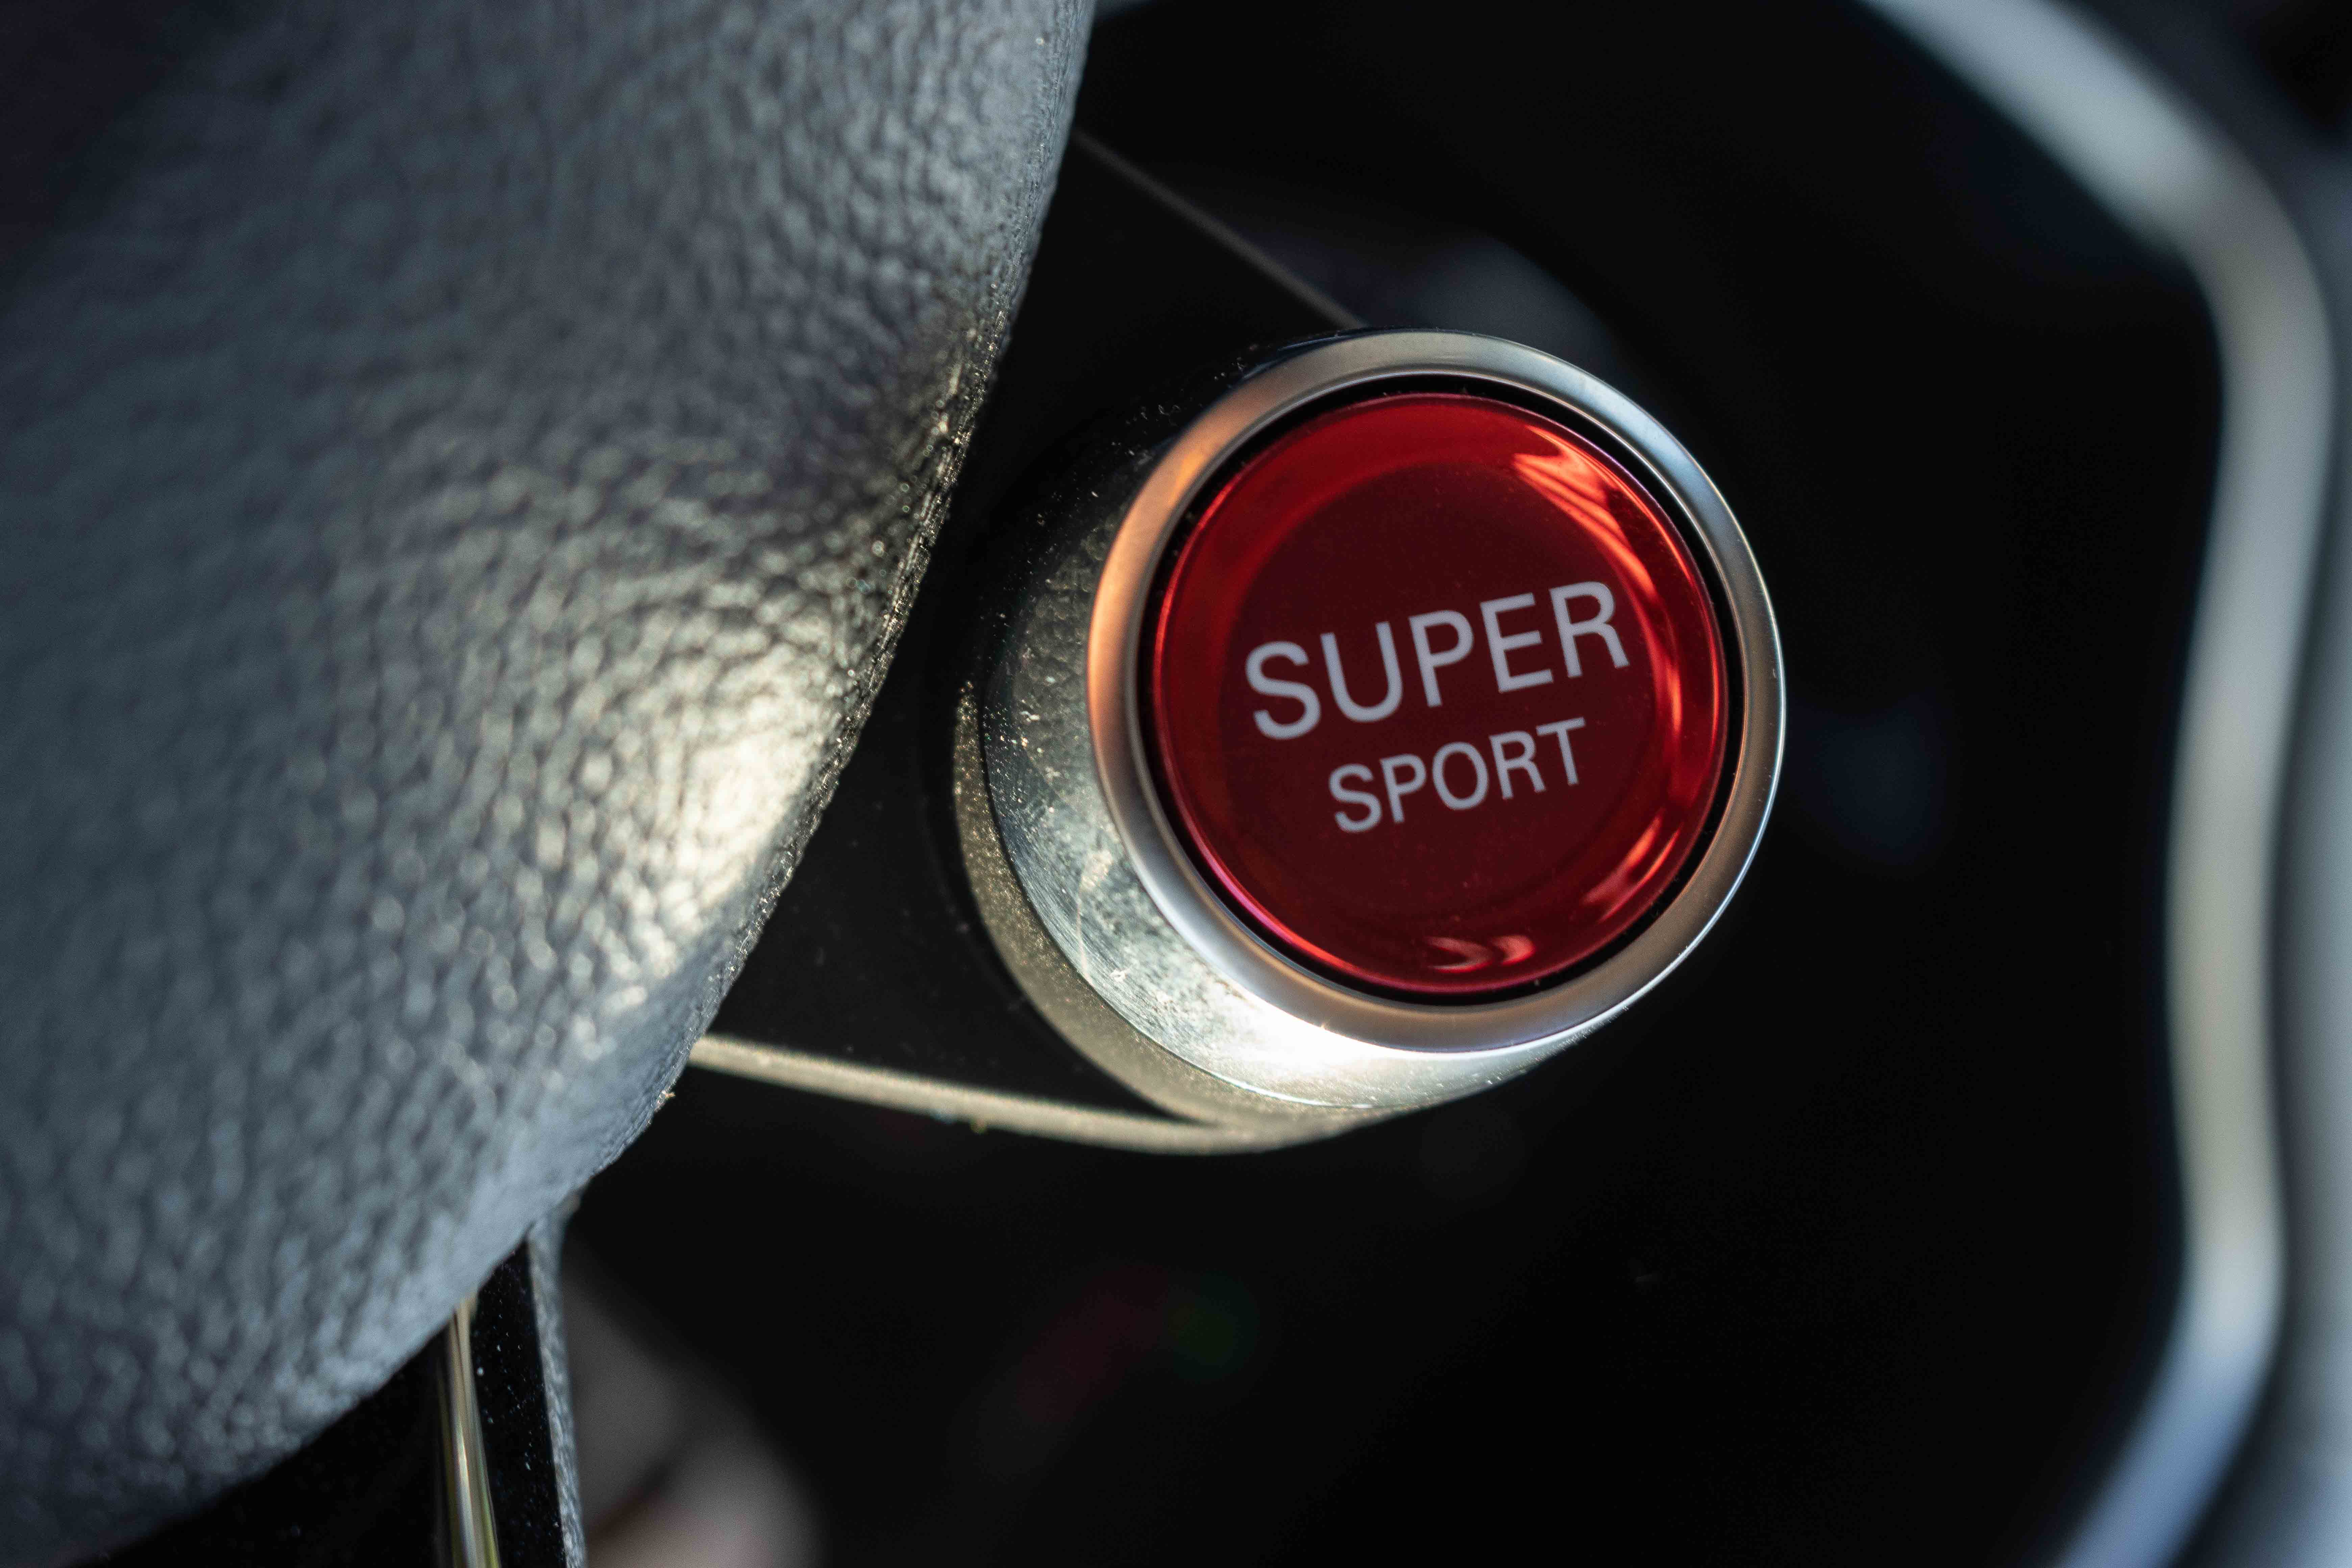 MG HS Singapore - Super Sport button